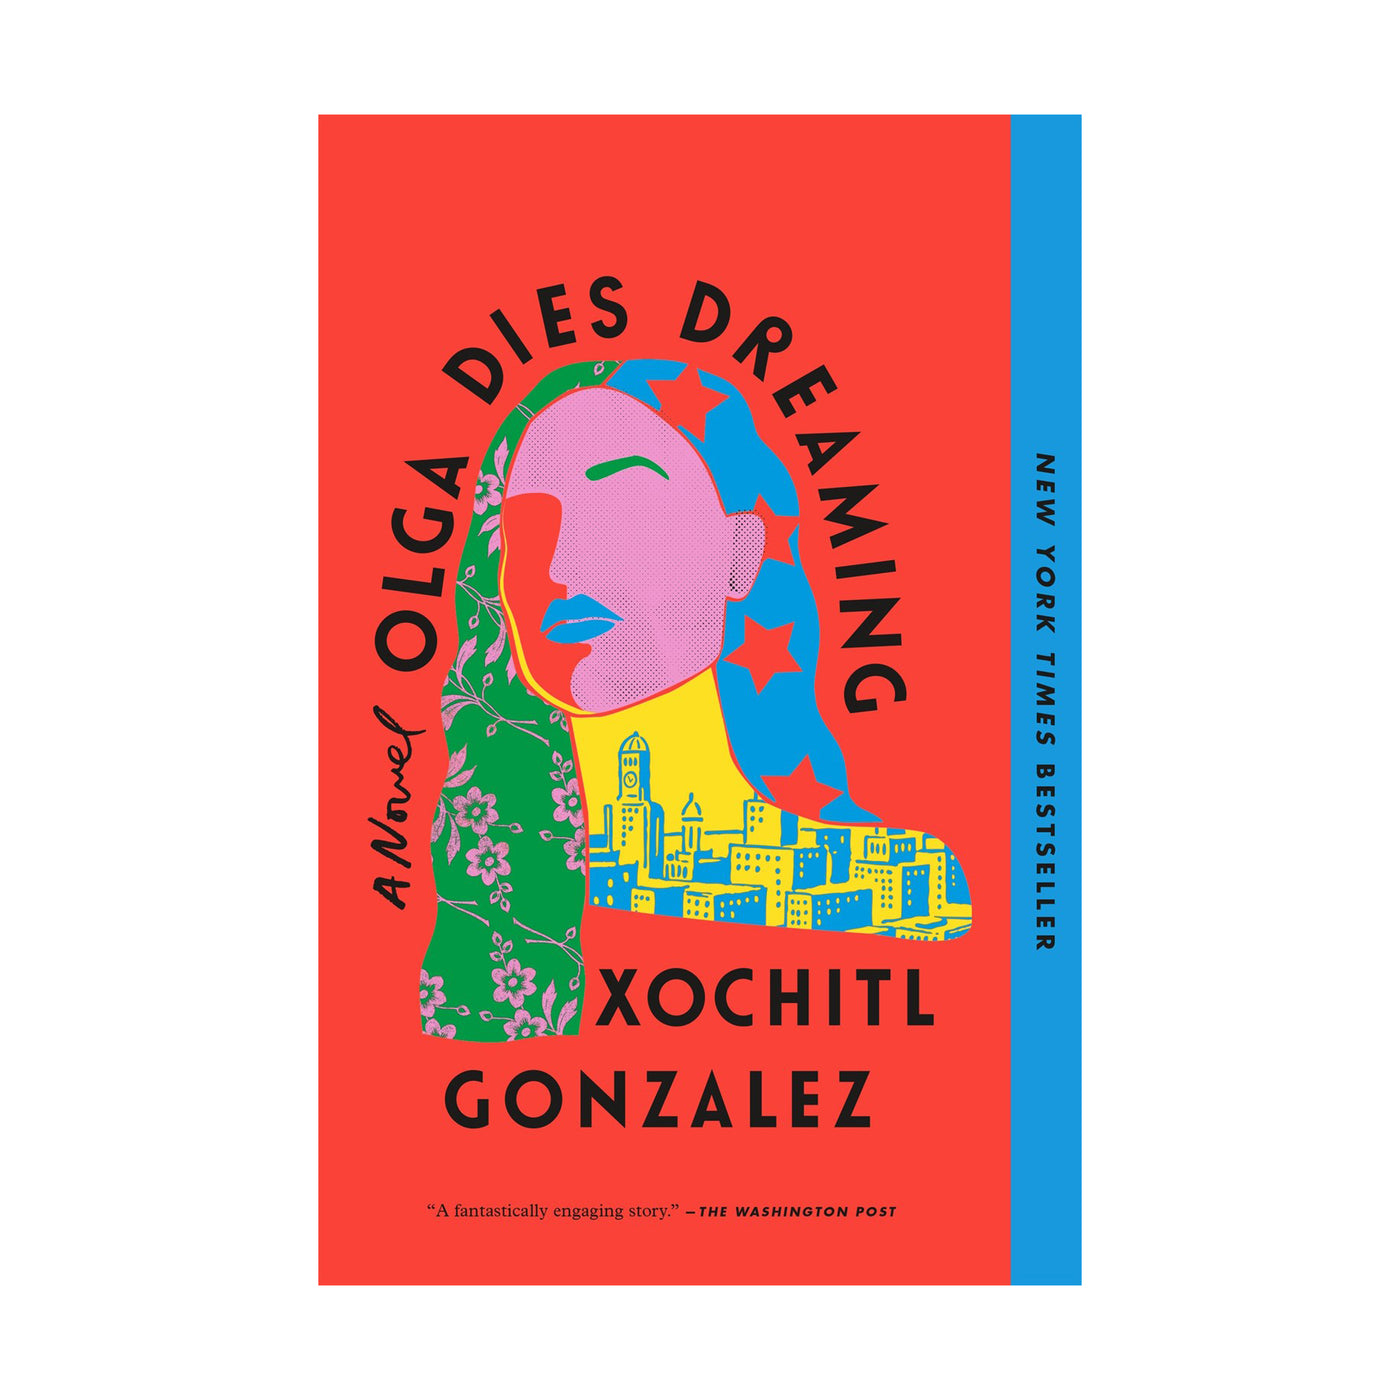 Olga Dies Dreaming - AW Book Club, October 2023